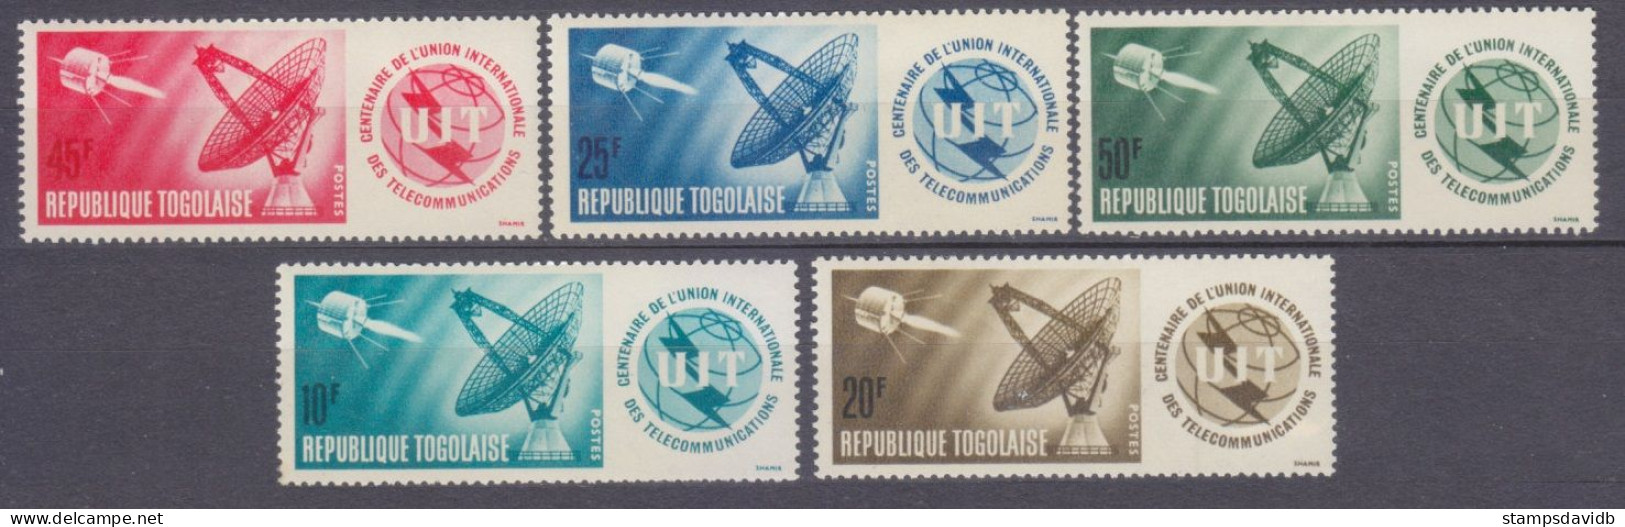 1965 Togo 457-461 100 Years Of ITU - UPU (Unione Postale Universale)